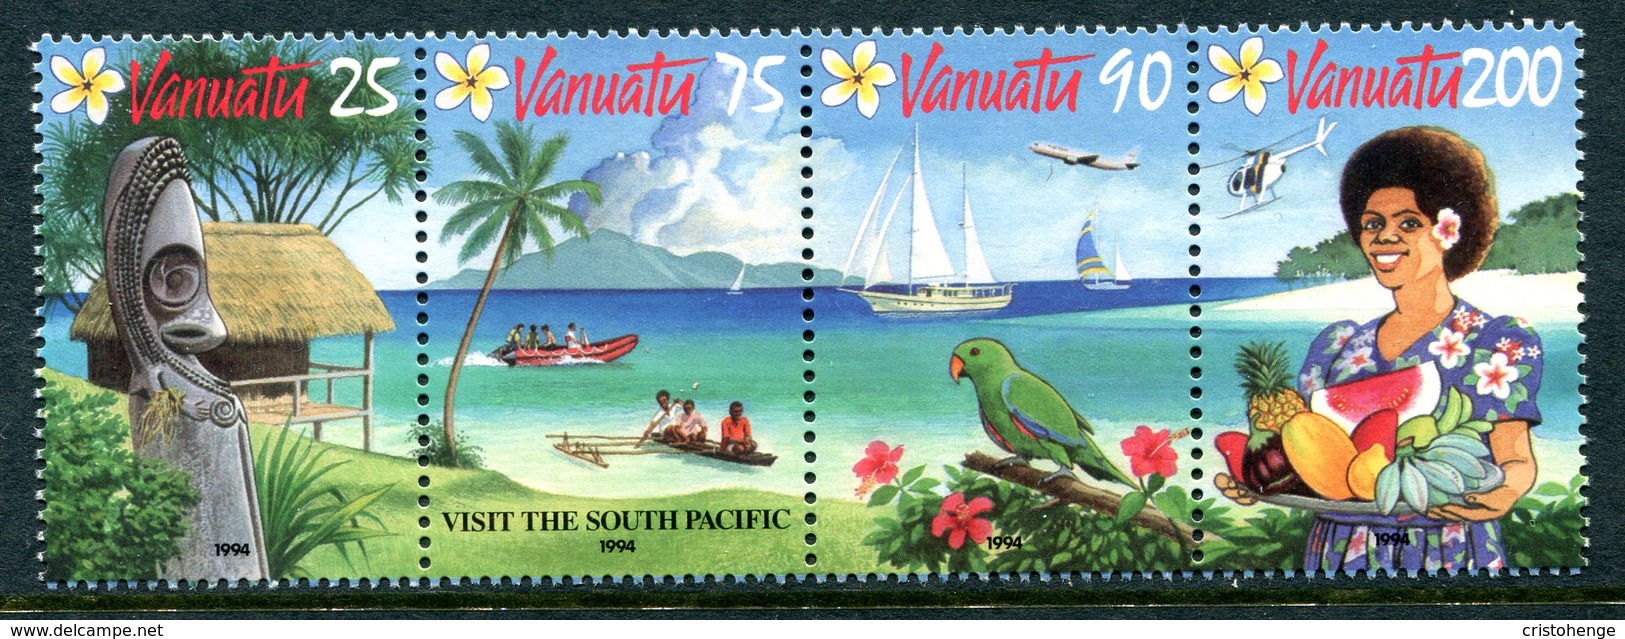 Vanuatu 1994 Tourism Set MNH (SG 669-672) - Vanuatu (1980-...)